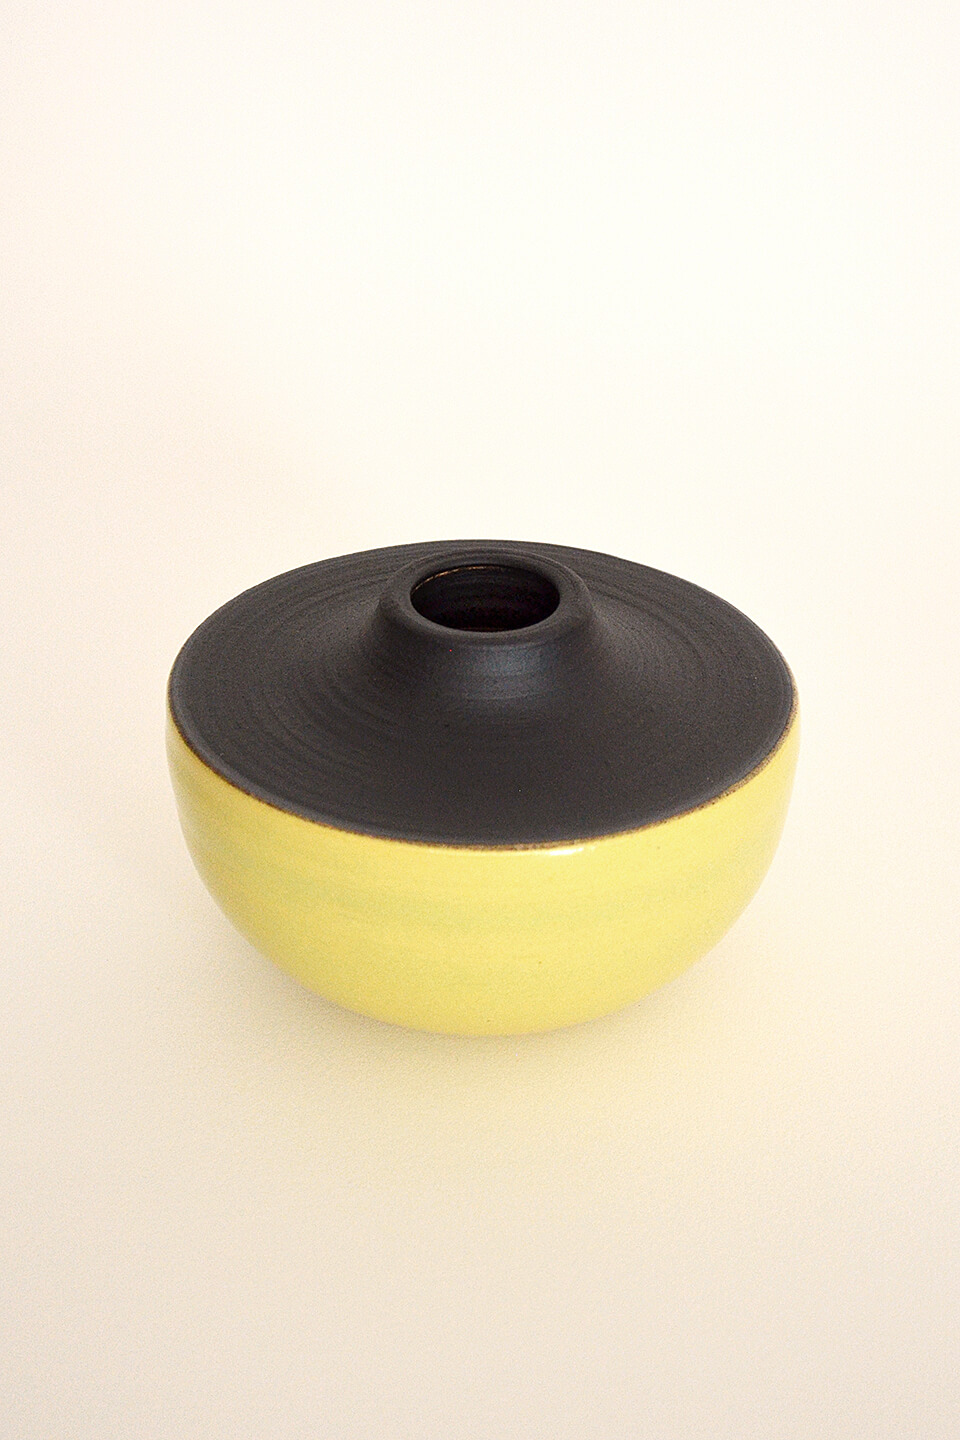 Black + Satin Yellow Green Ceramic Vase No. 634